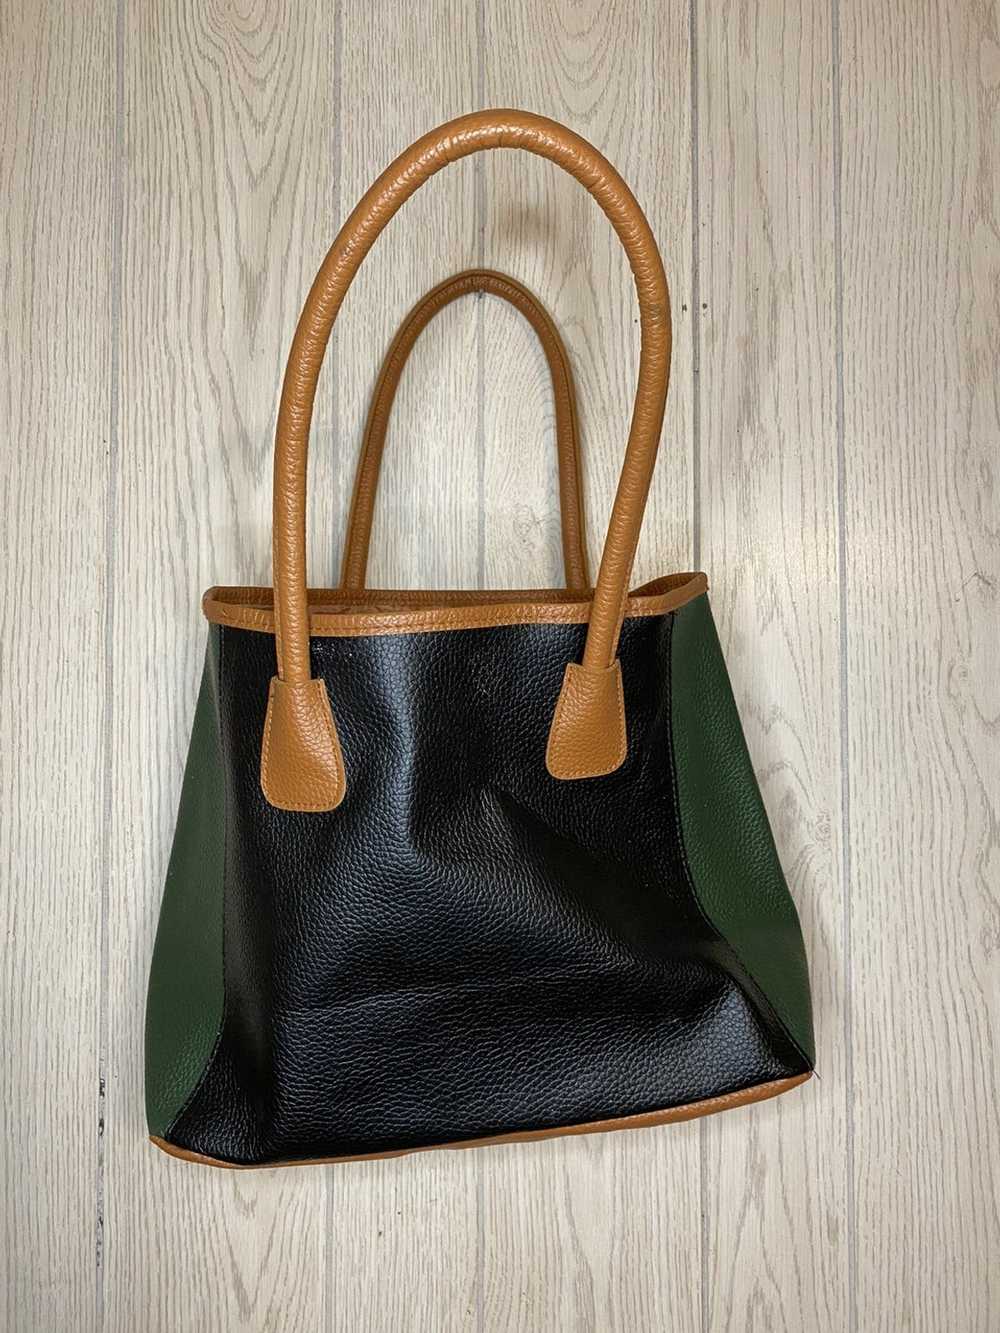 Neiman Marcus Black & Green Neiman Marcus Handbag… - image 7